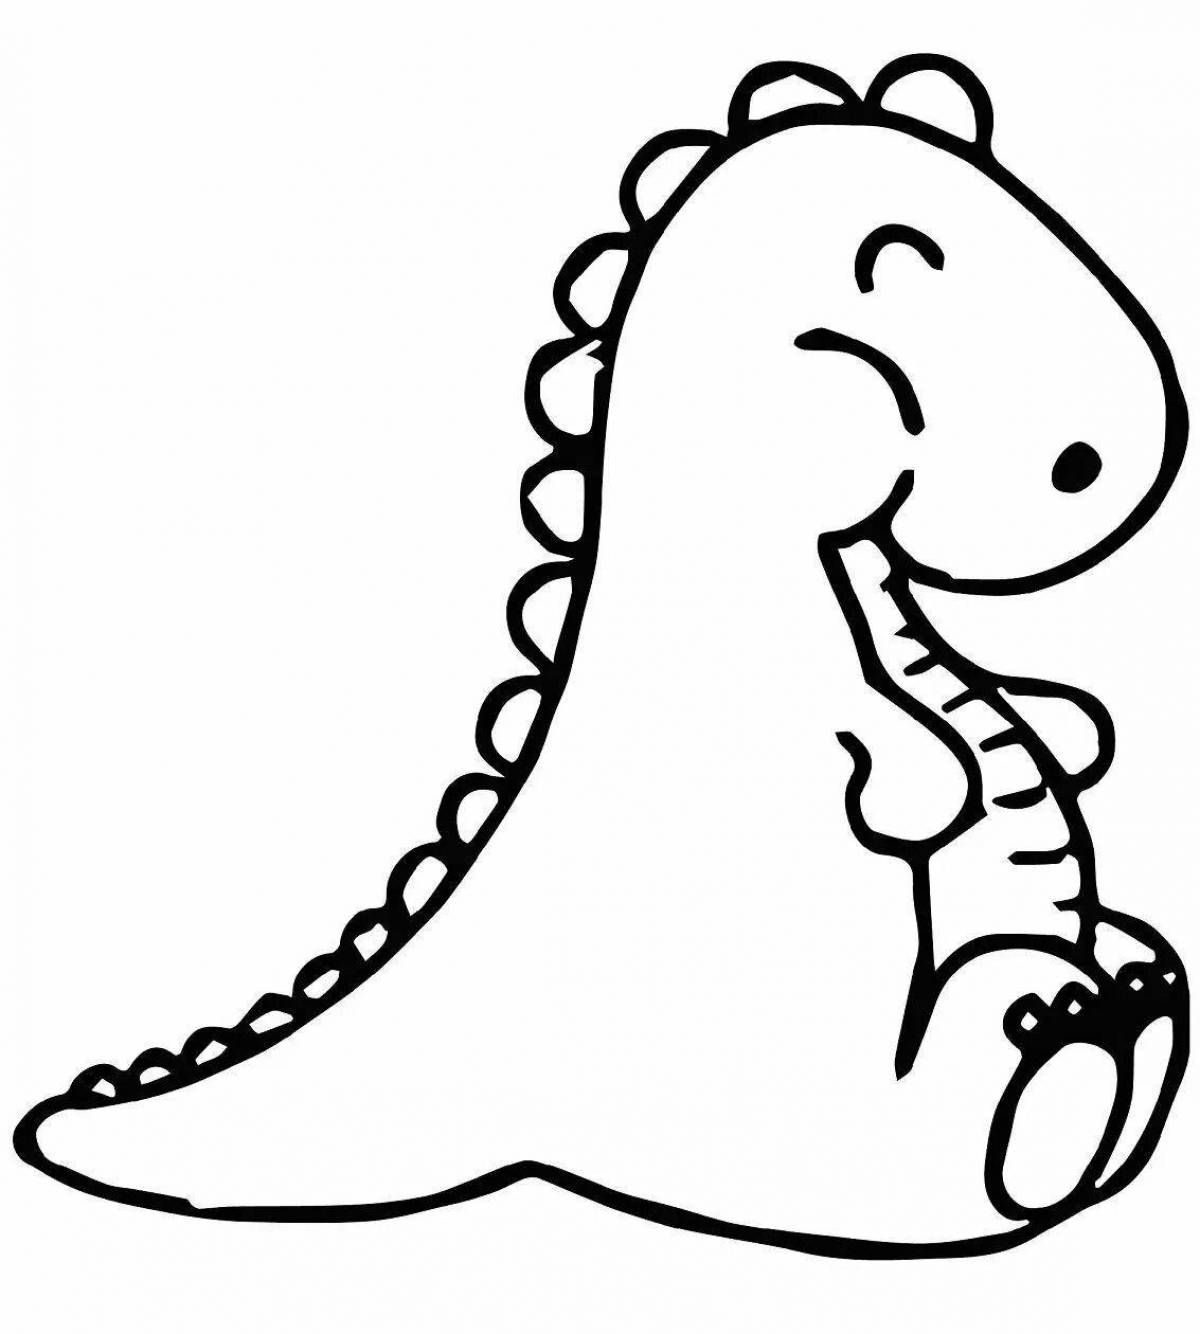 Playful cute dinosaur coloring book